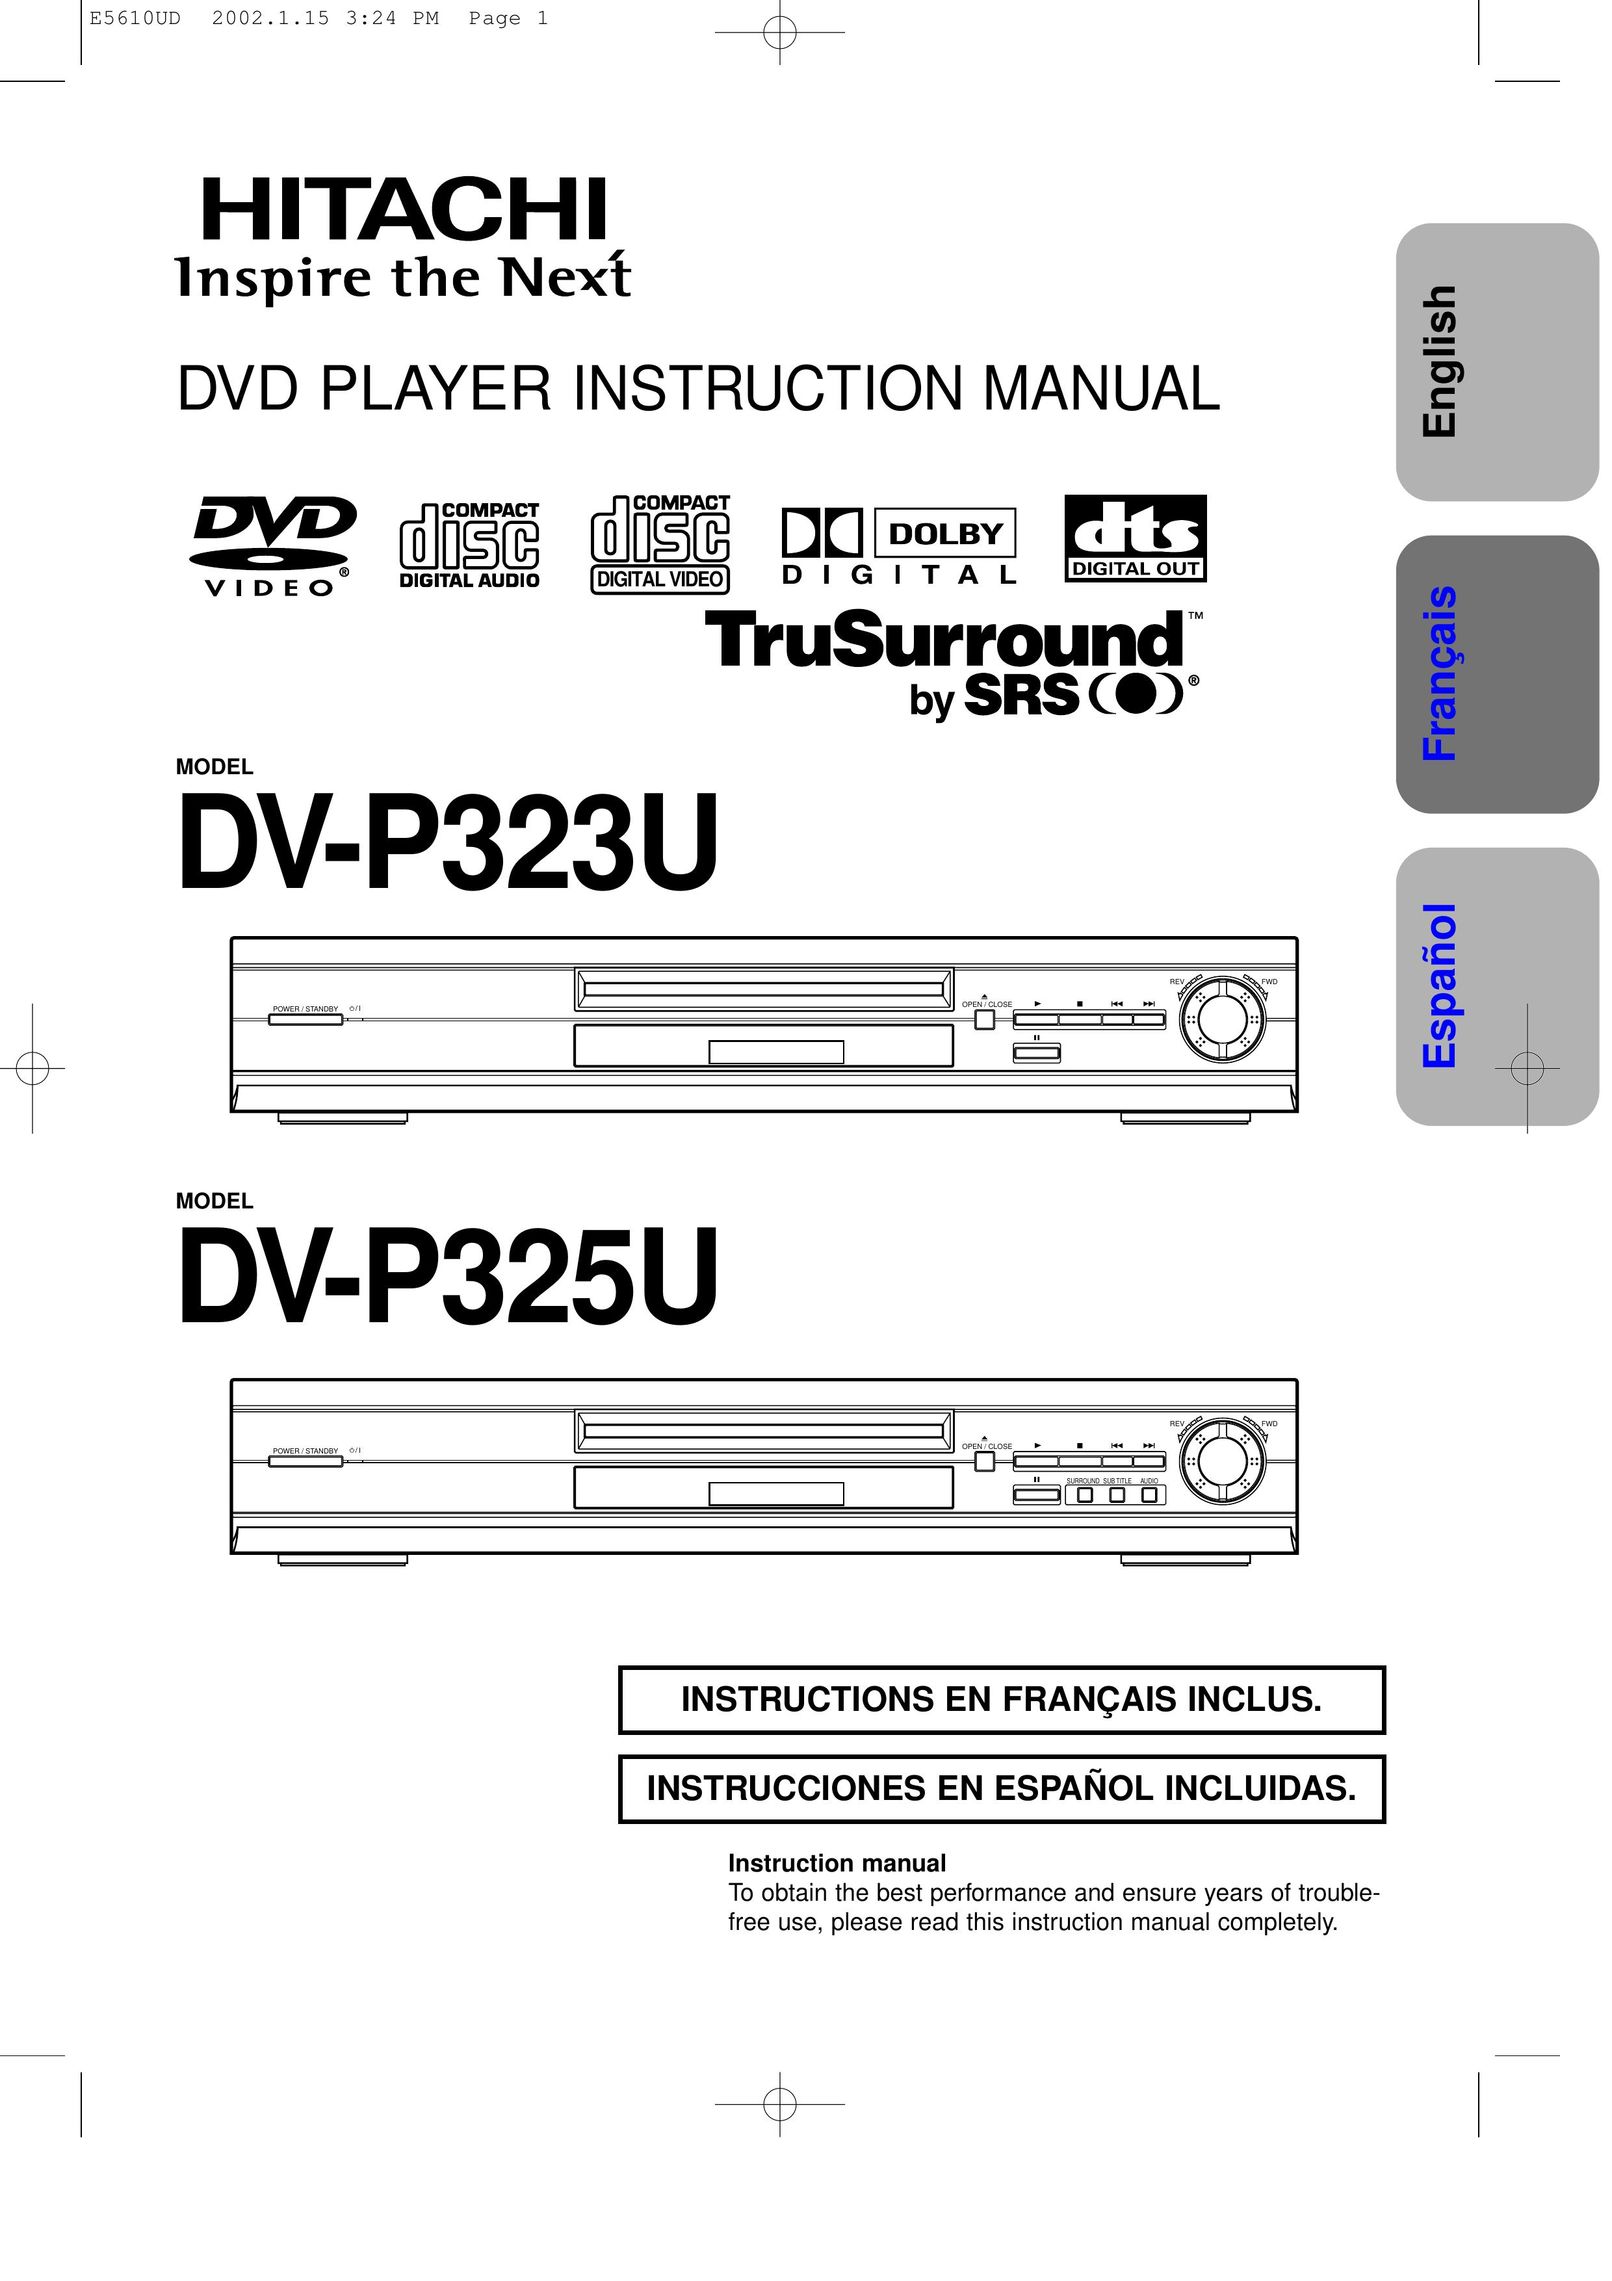 Hitachi DVP325U DVD Player User Manual